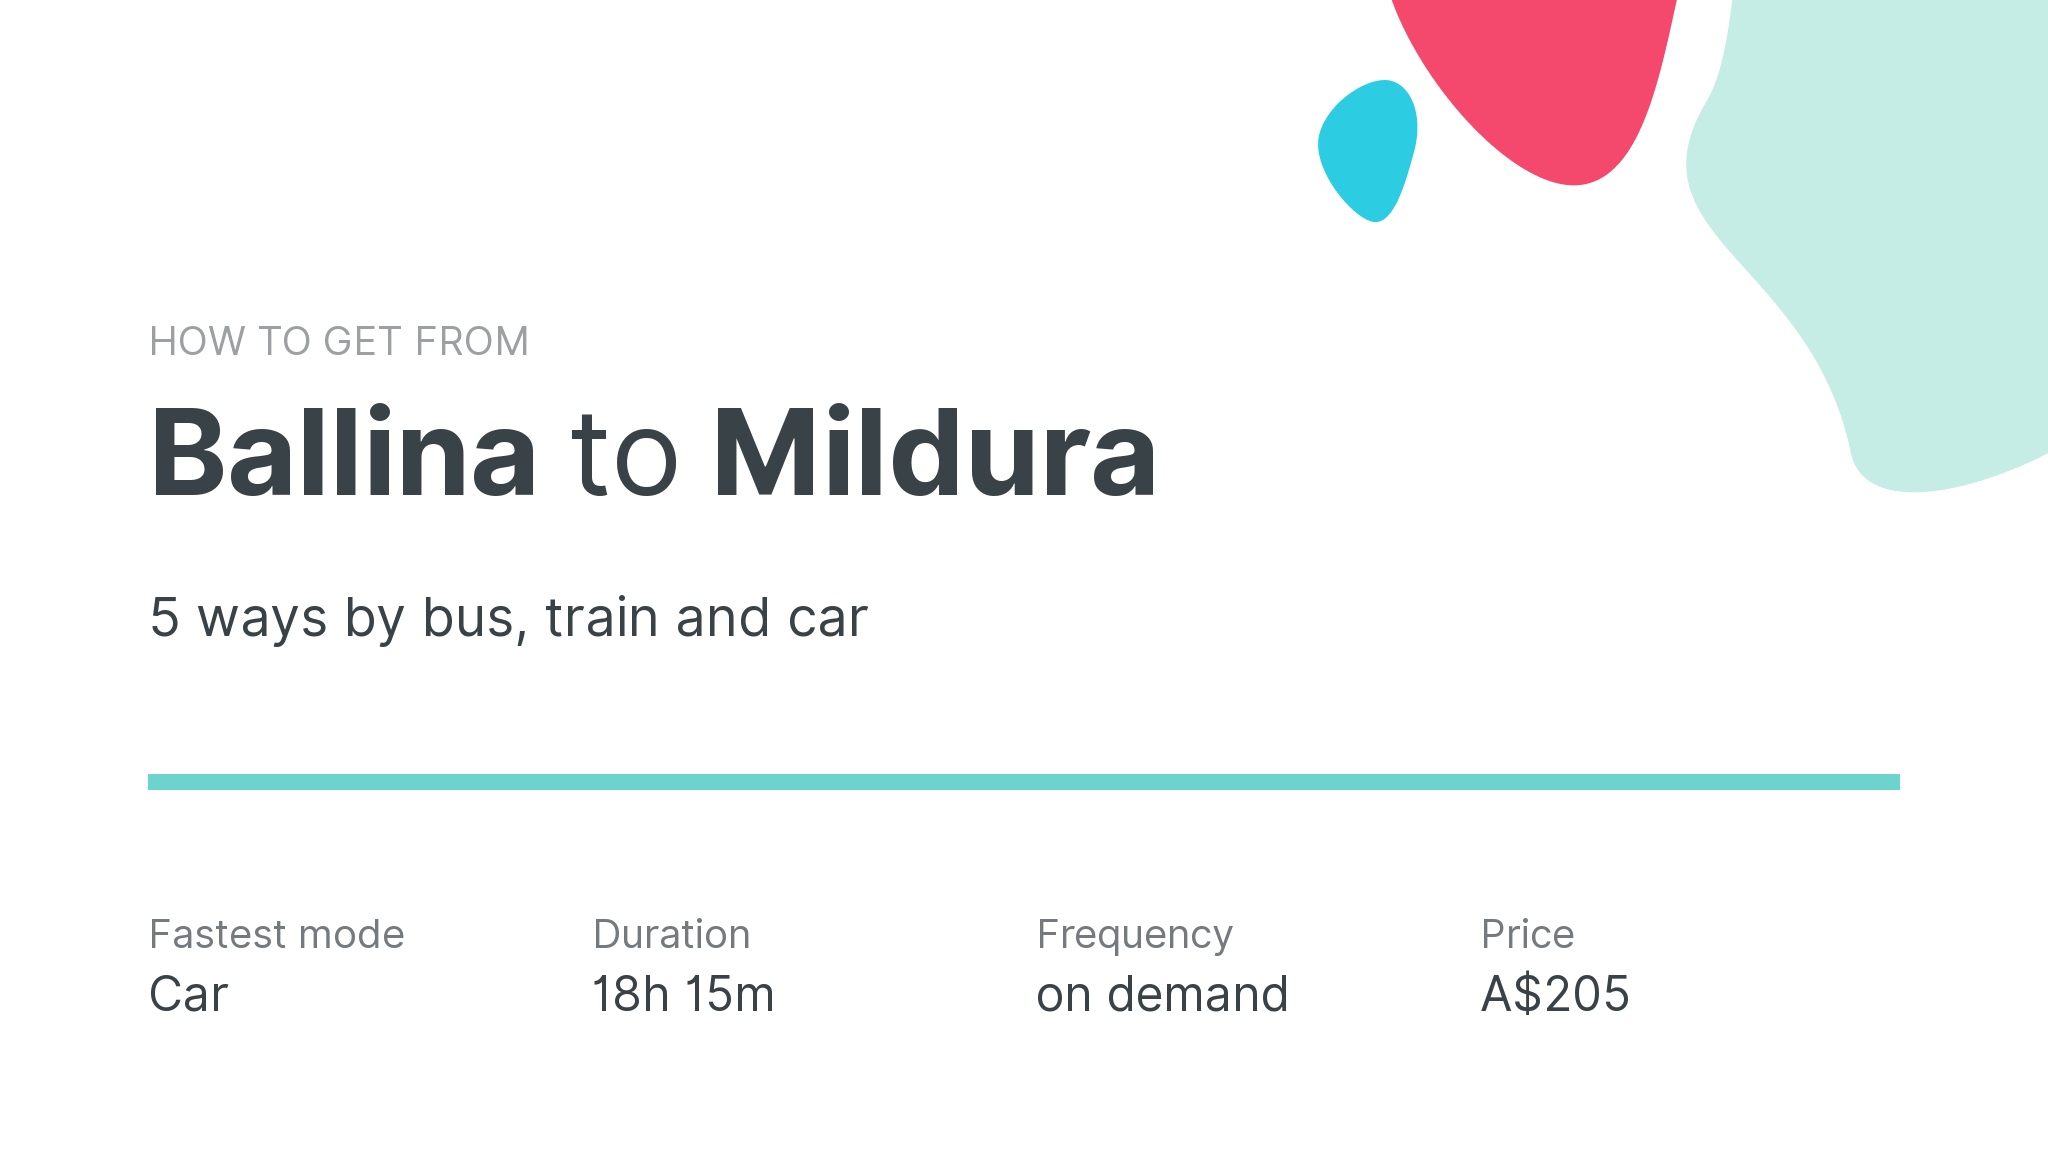 How do I get from Ballina to Mildura